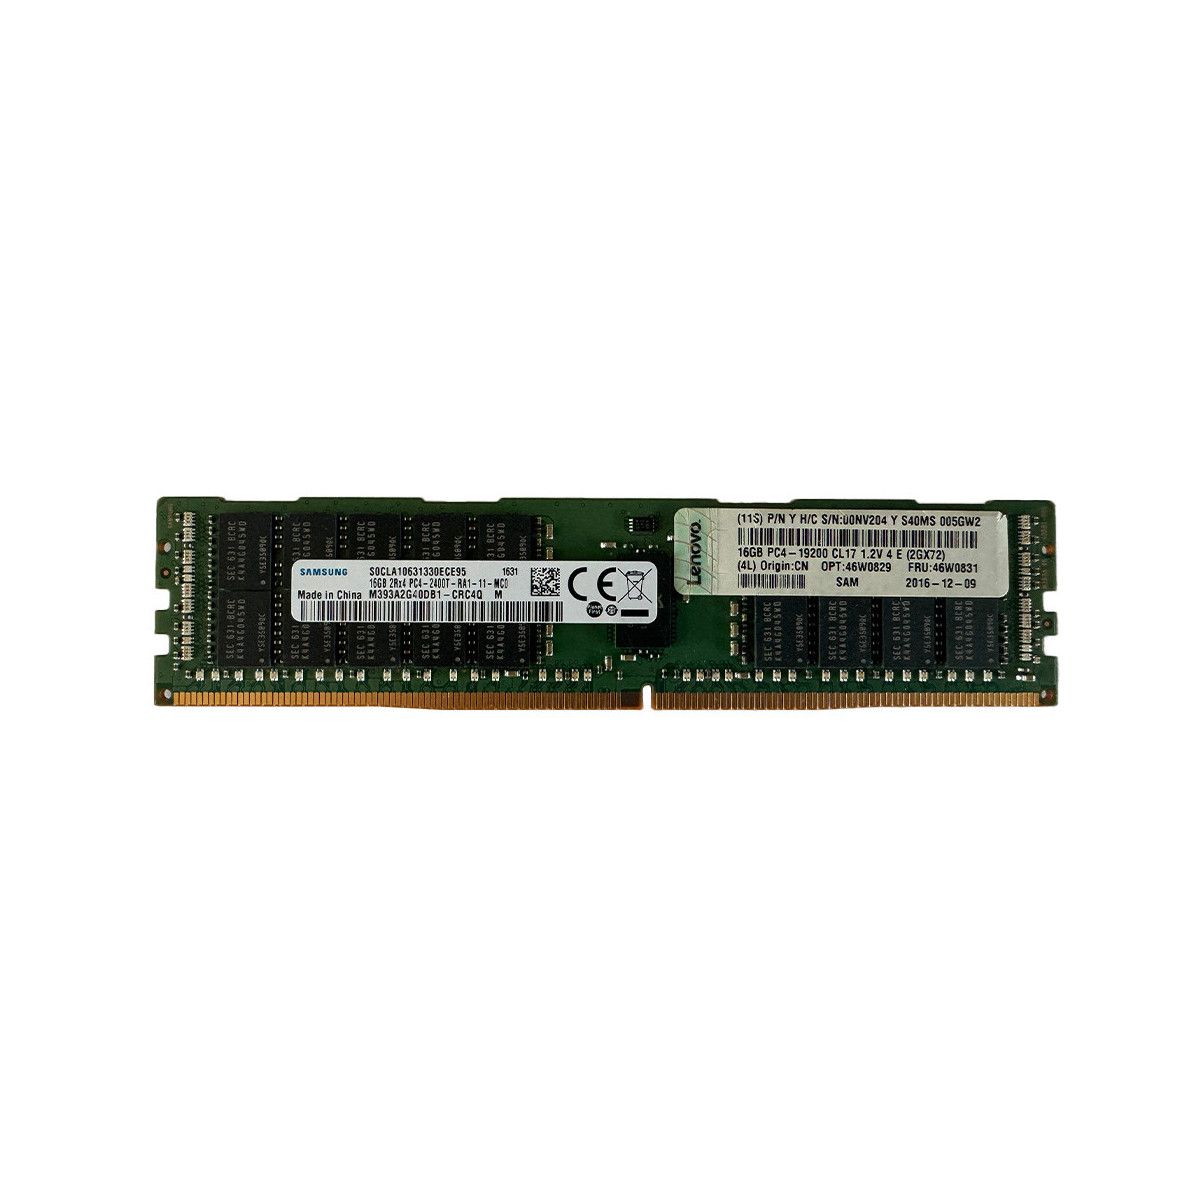 A8797578-MS - Memstar 1x 16GB DDR4-2400 RDIMM PC4-19200T-R - Mem-Star Compatibile OEM Memoria 1 - Memstar 